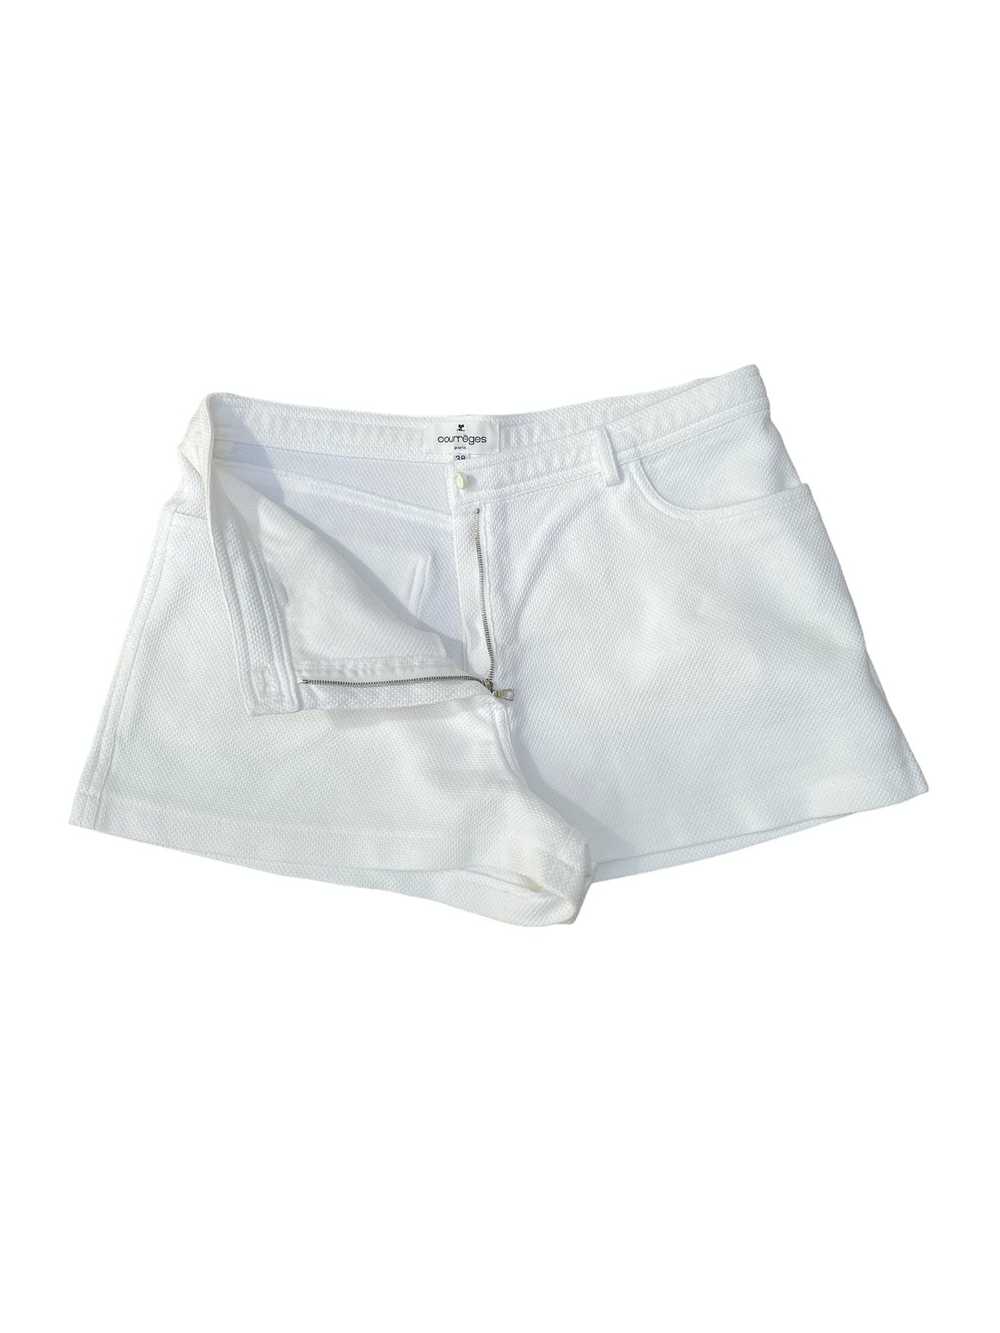 Courreges Vintage Heritage White Cotton Shorts - image 2